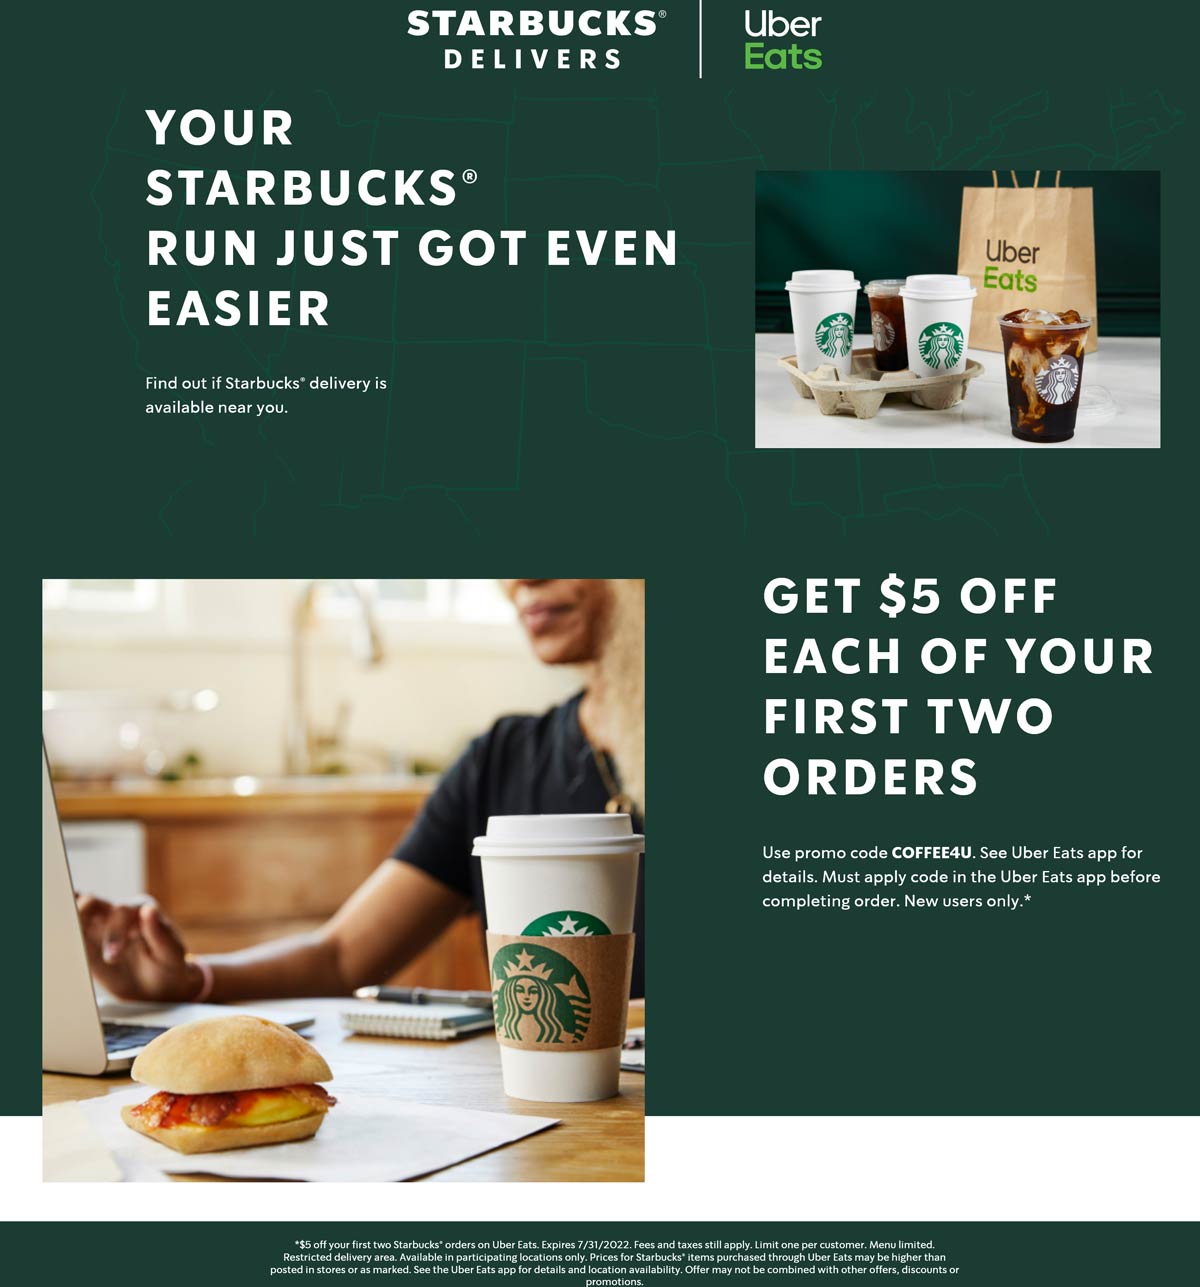 Starbucks restaurants Coupon  $5 off first 2 coffee delivery orders at Starbucks via promo code COFFEE4U #starbucks 